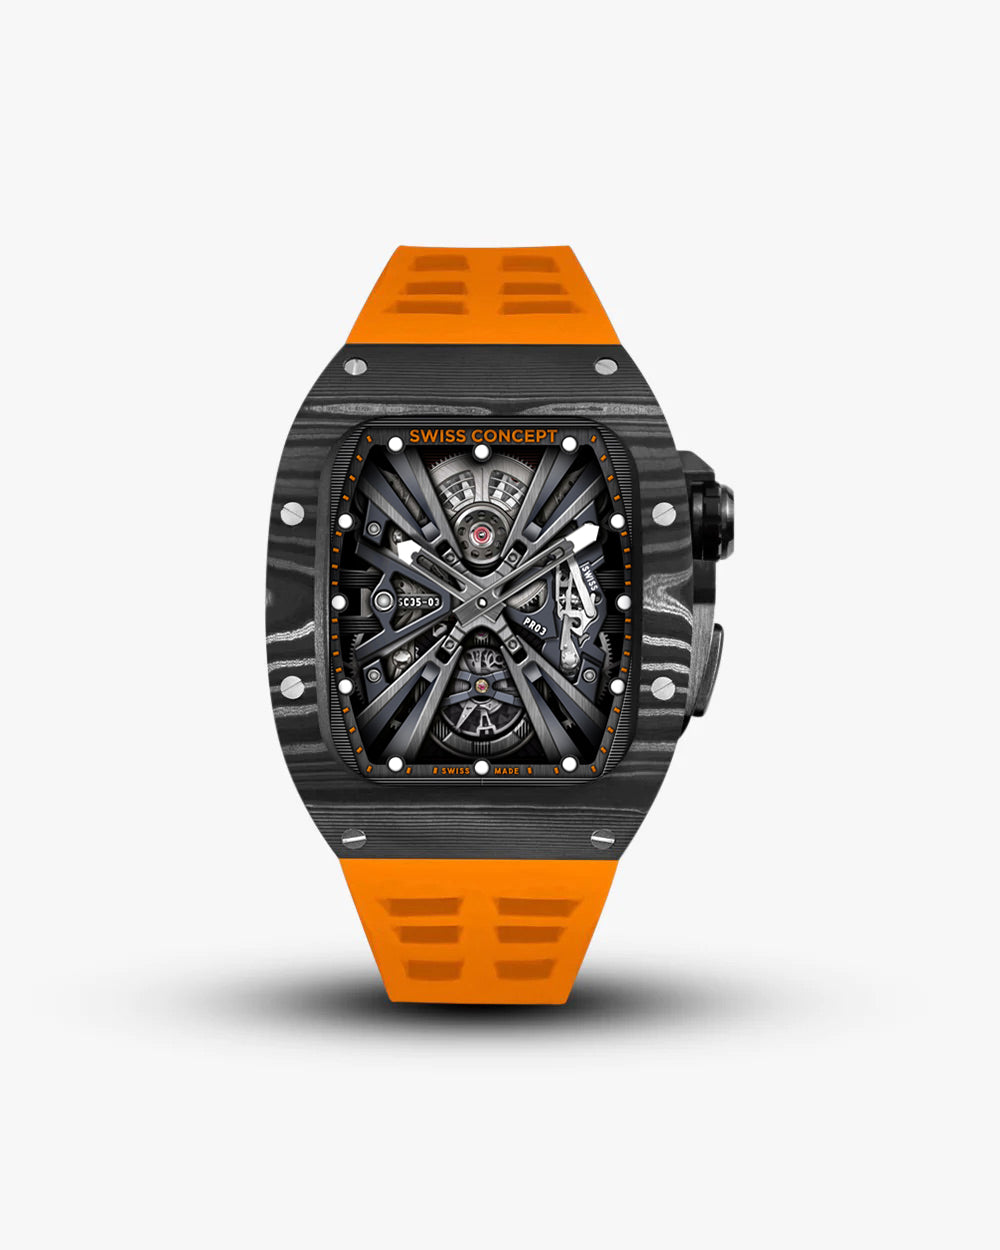 Swiss Concept Racing Elite Edition Nero Forged Carbon, Matte Black & Arancio Orange Apple Watch Case - Swiss Design